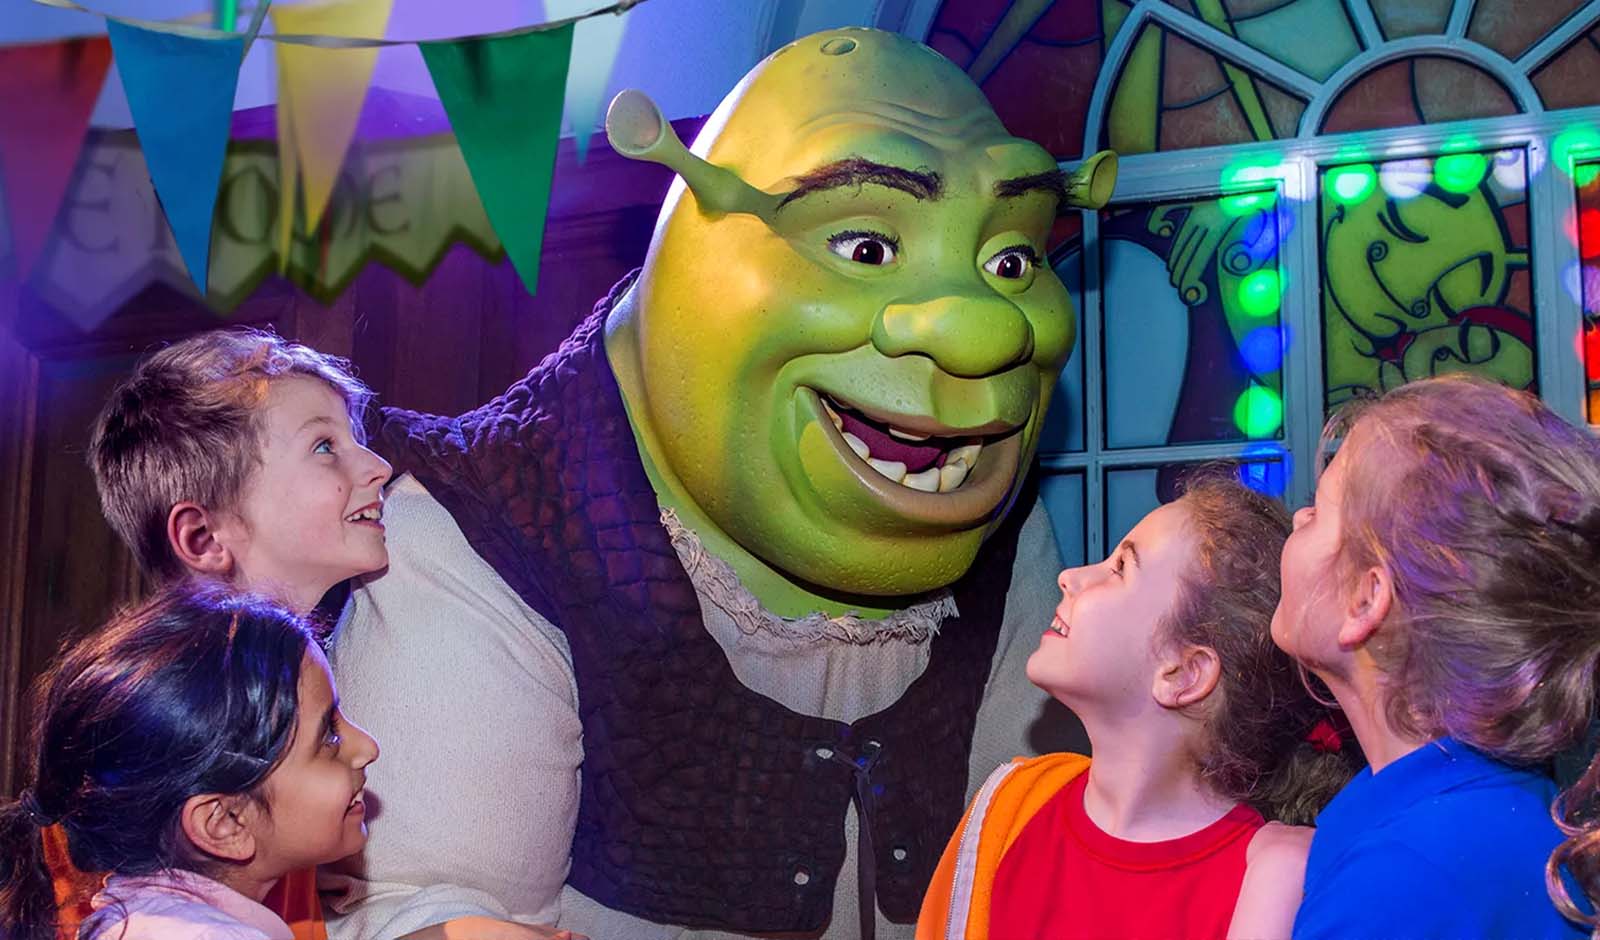 London Locals Saver: Get 50% Off Shrek's Adventure Entry!